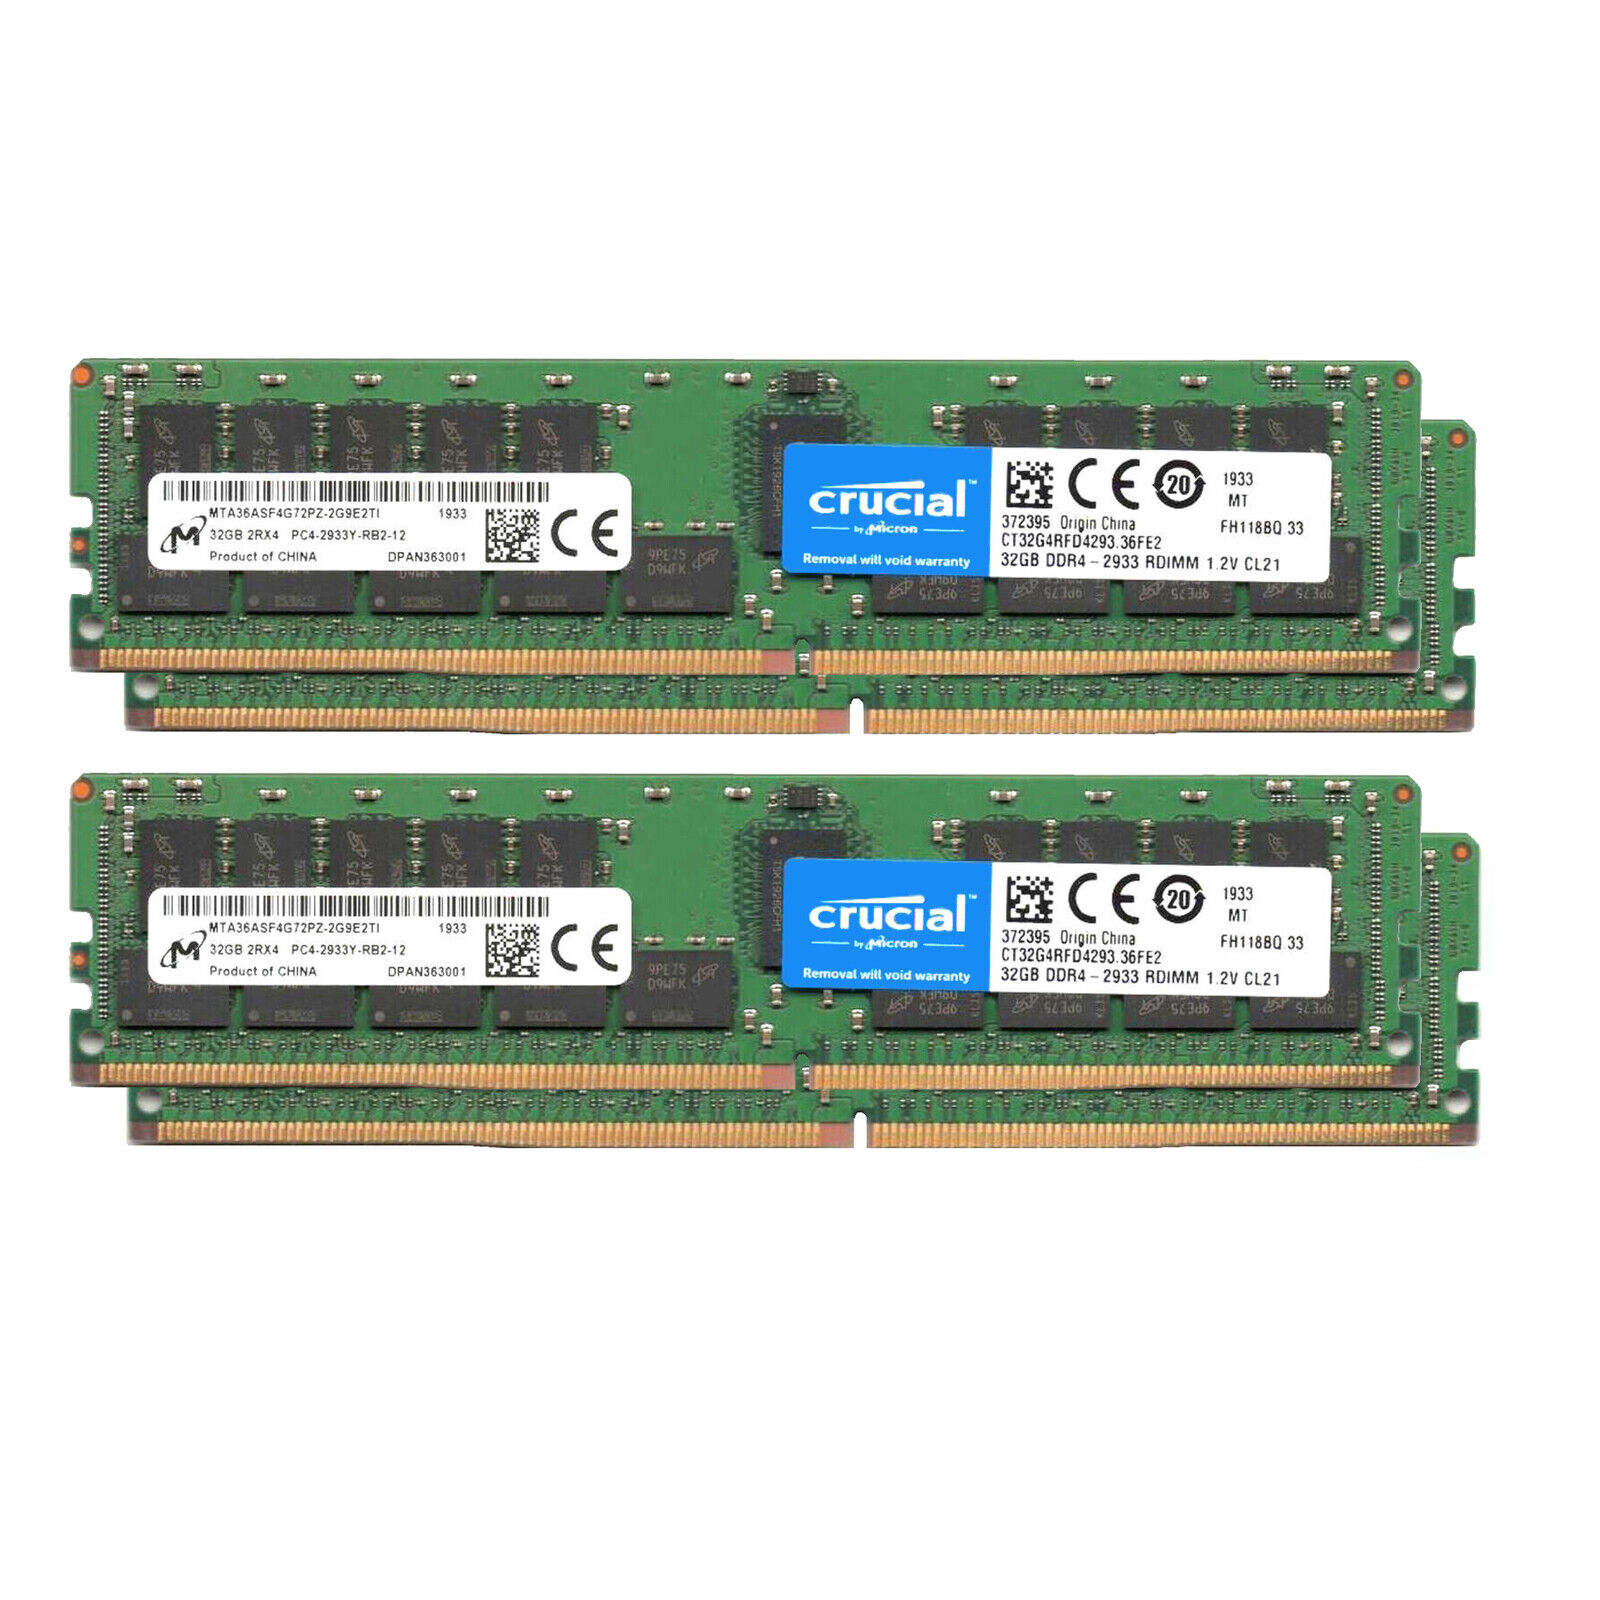 Crucial DDR4 128GB(4x 32GB) KIT 2933MHz PC4-23400 2Rx4 REG ECC Server Memory RAM